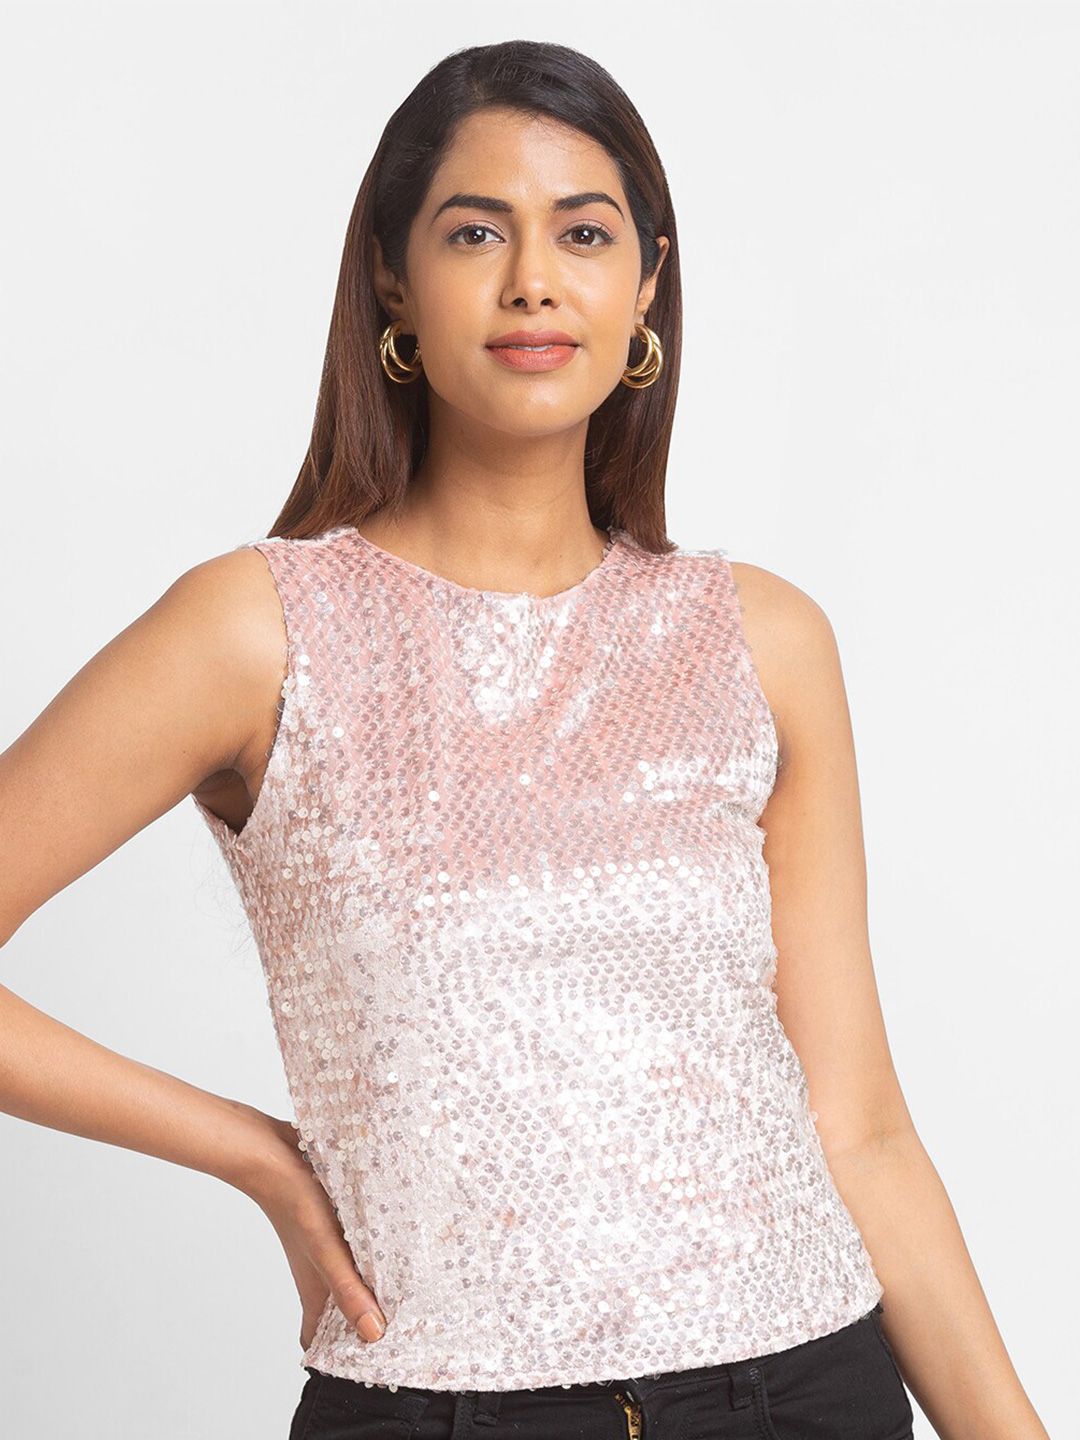 Globus WOMEN Pink Embellished Top Price in India